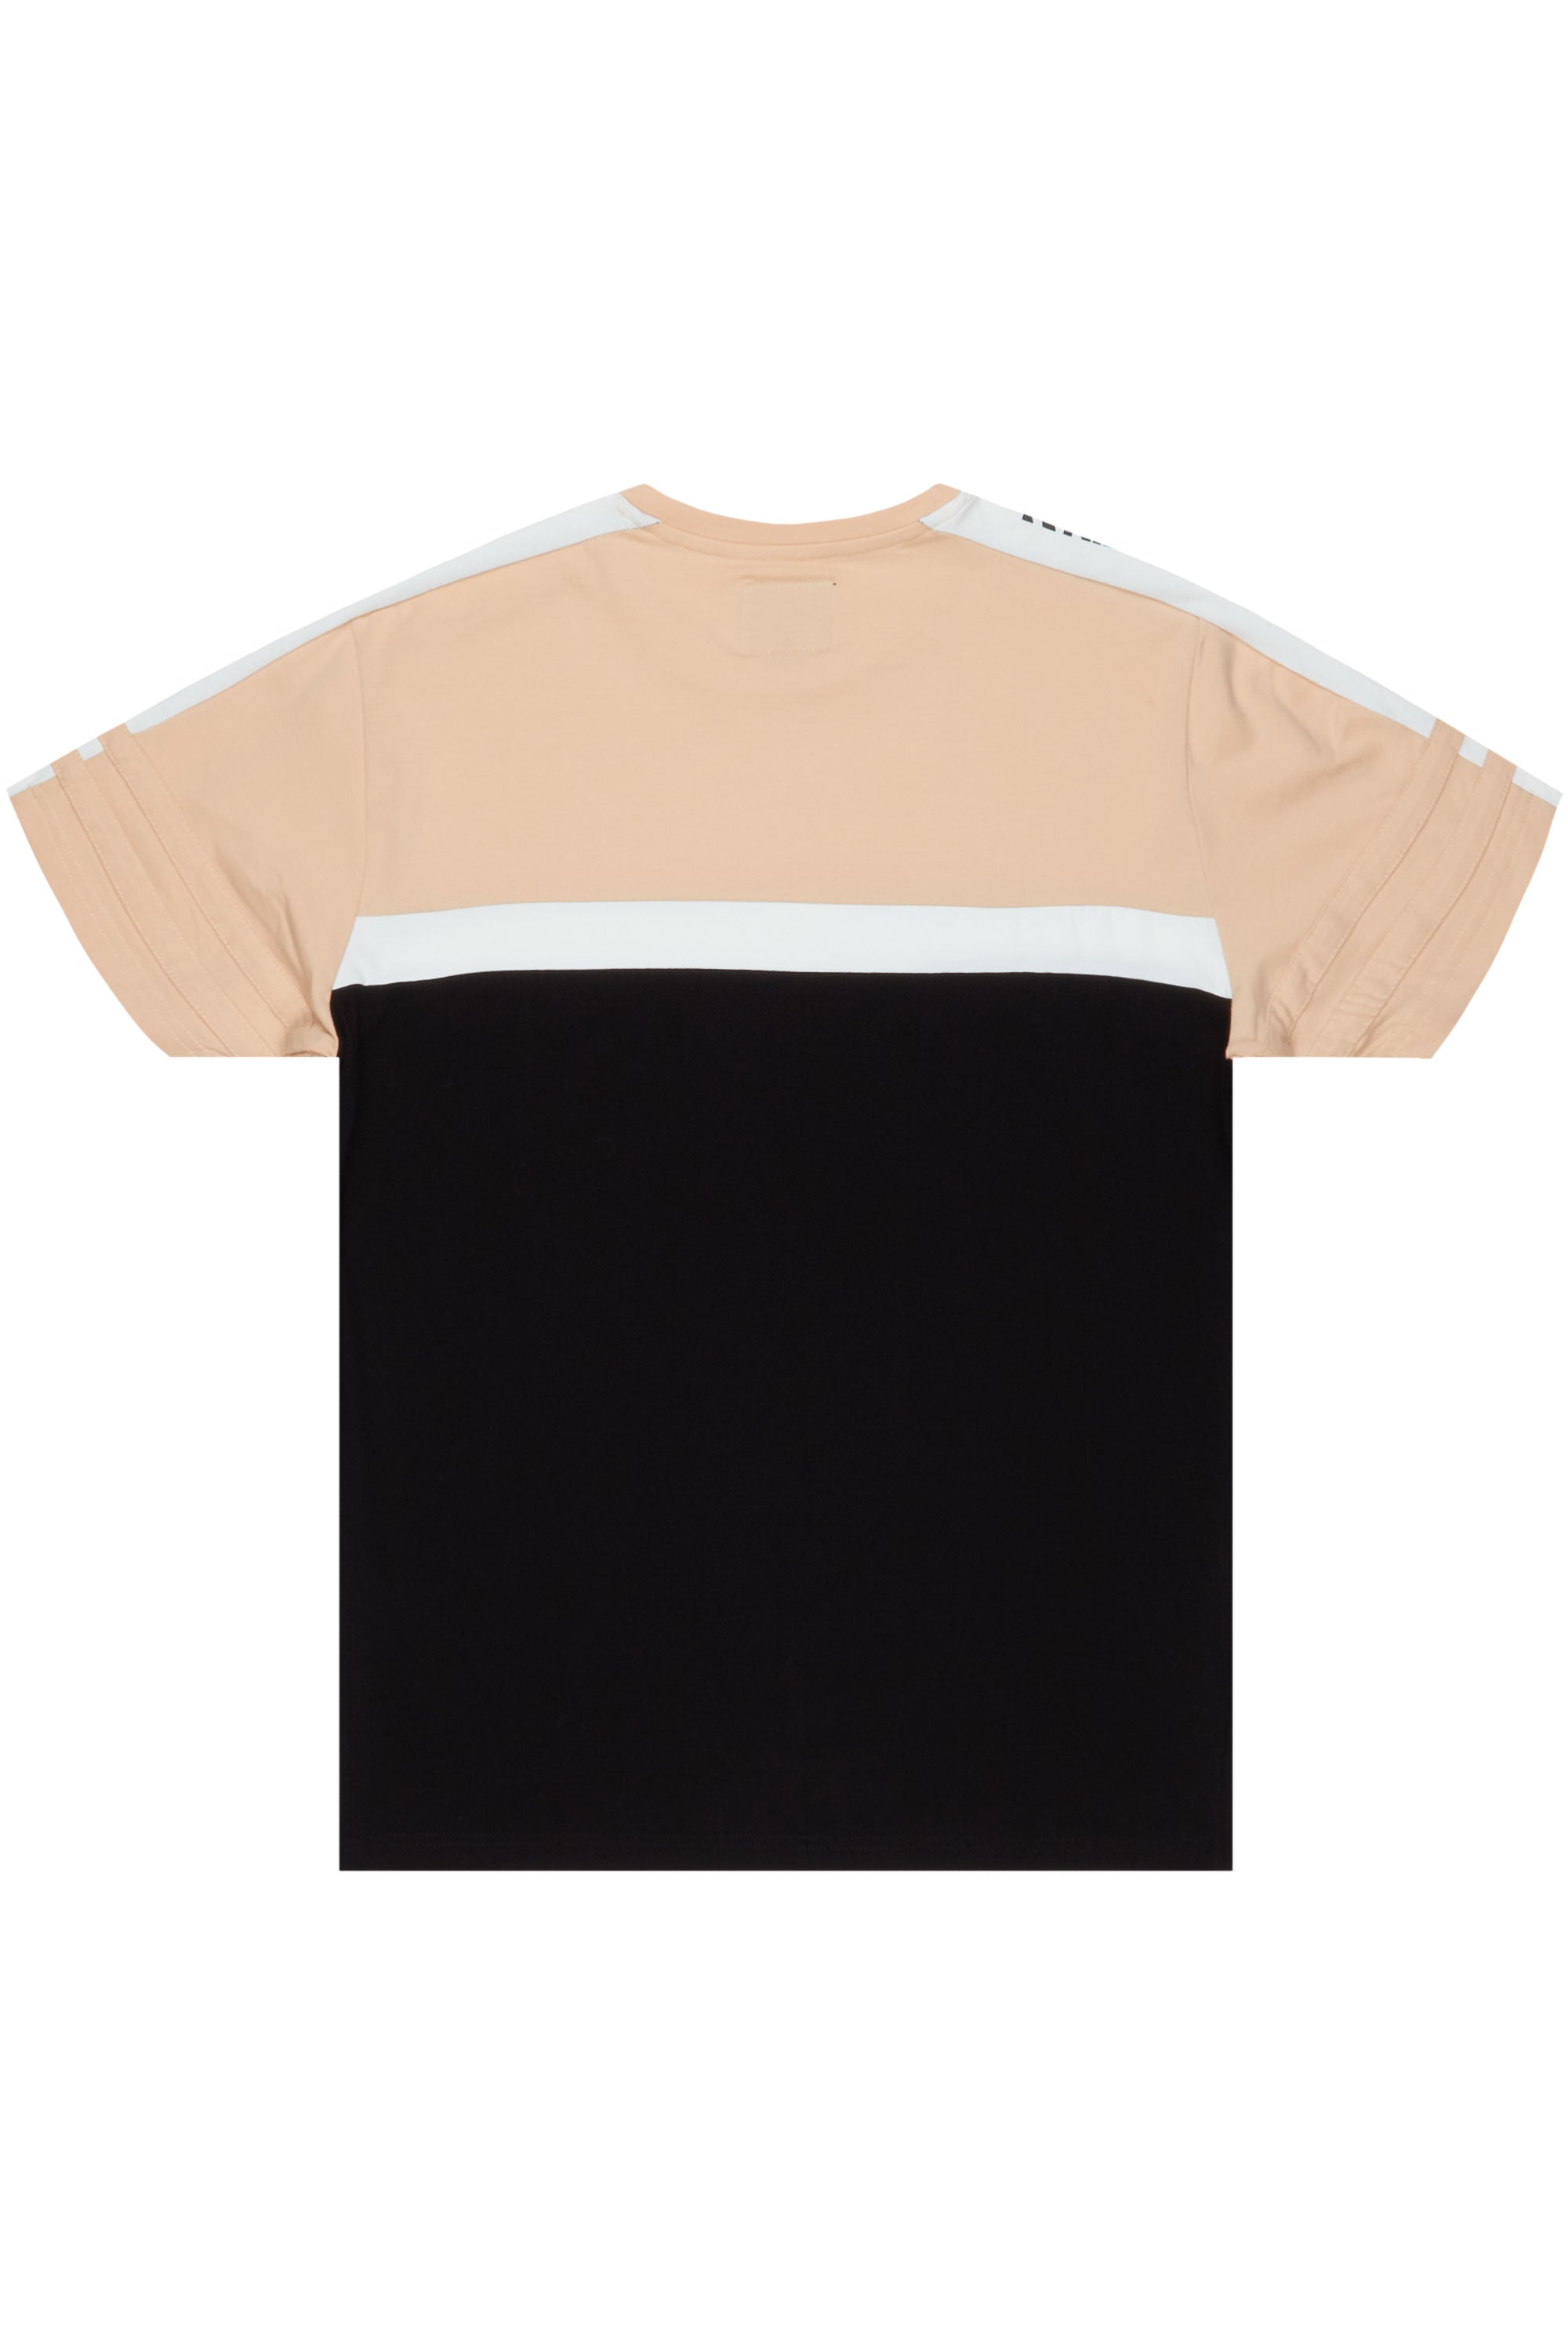 Jackson Beige/Black Graphic T-Shirt